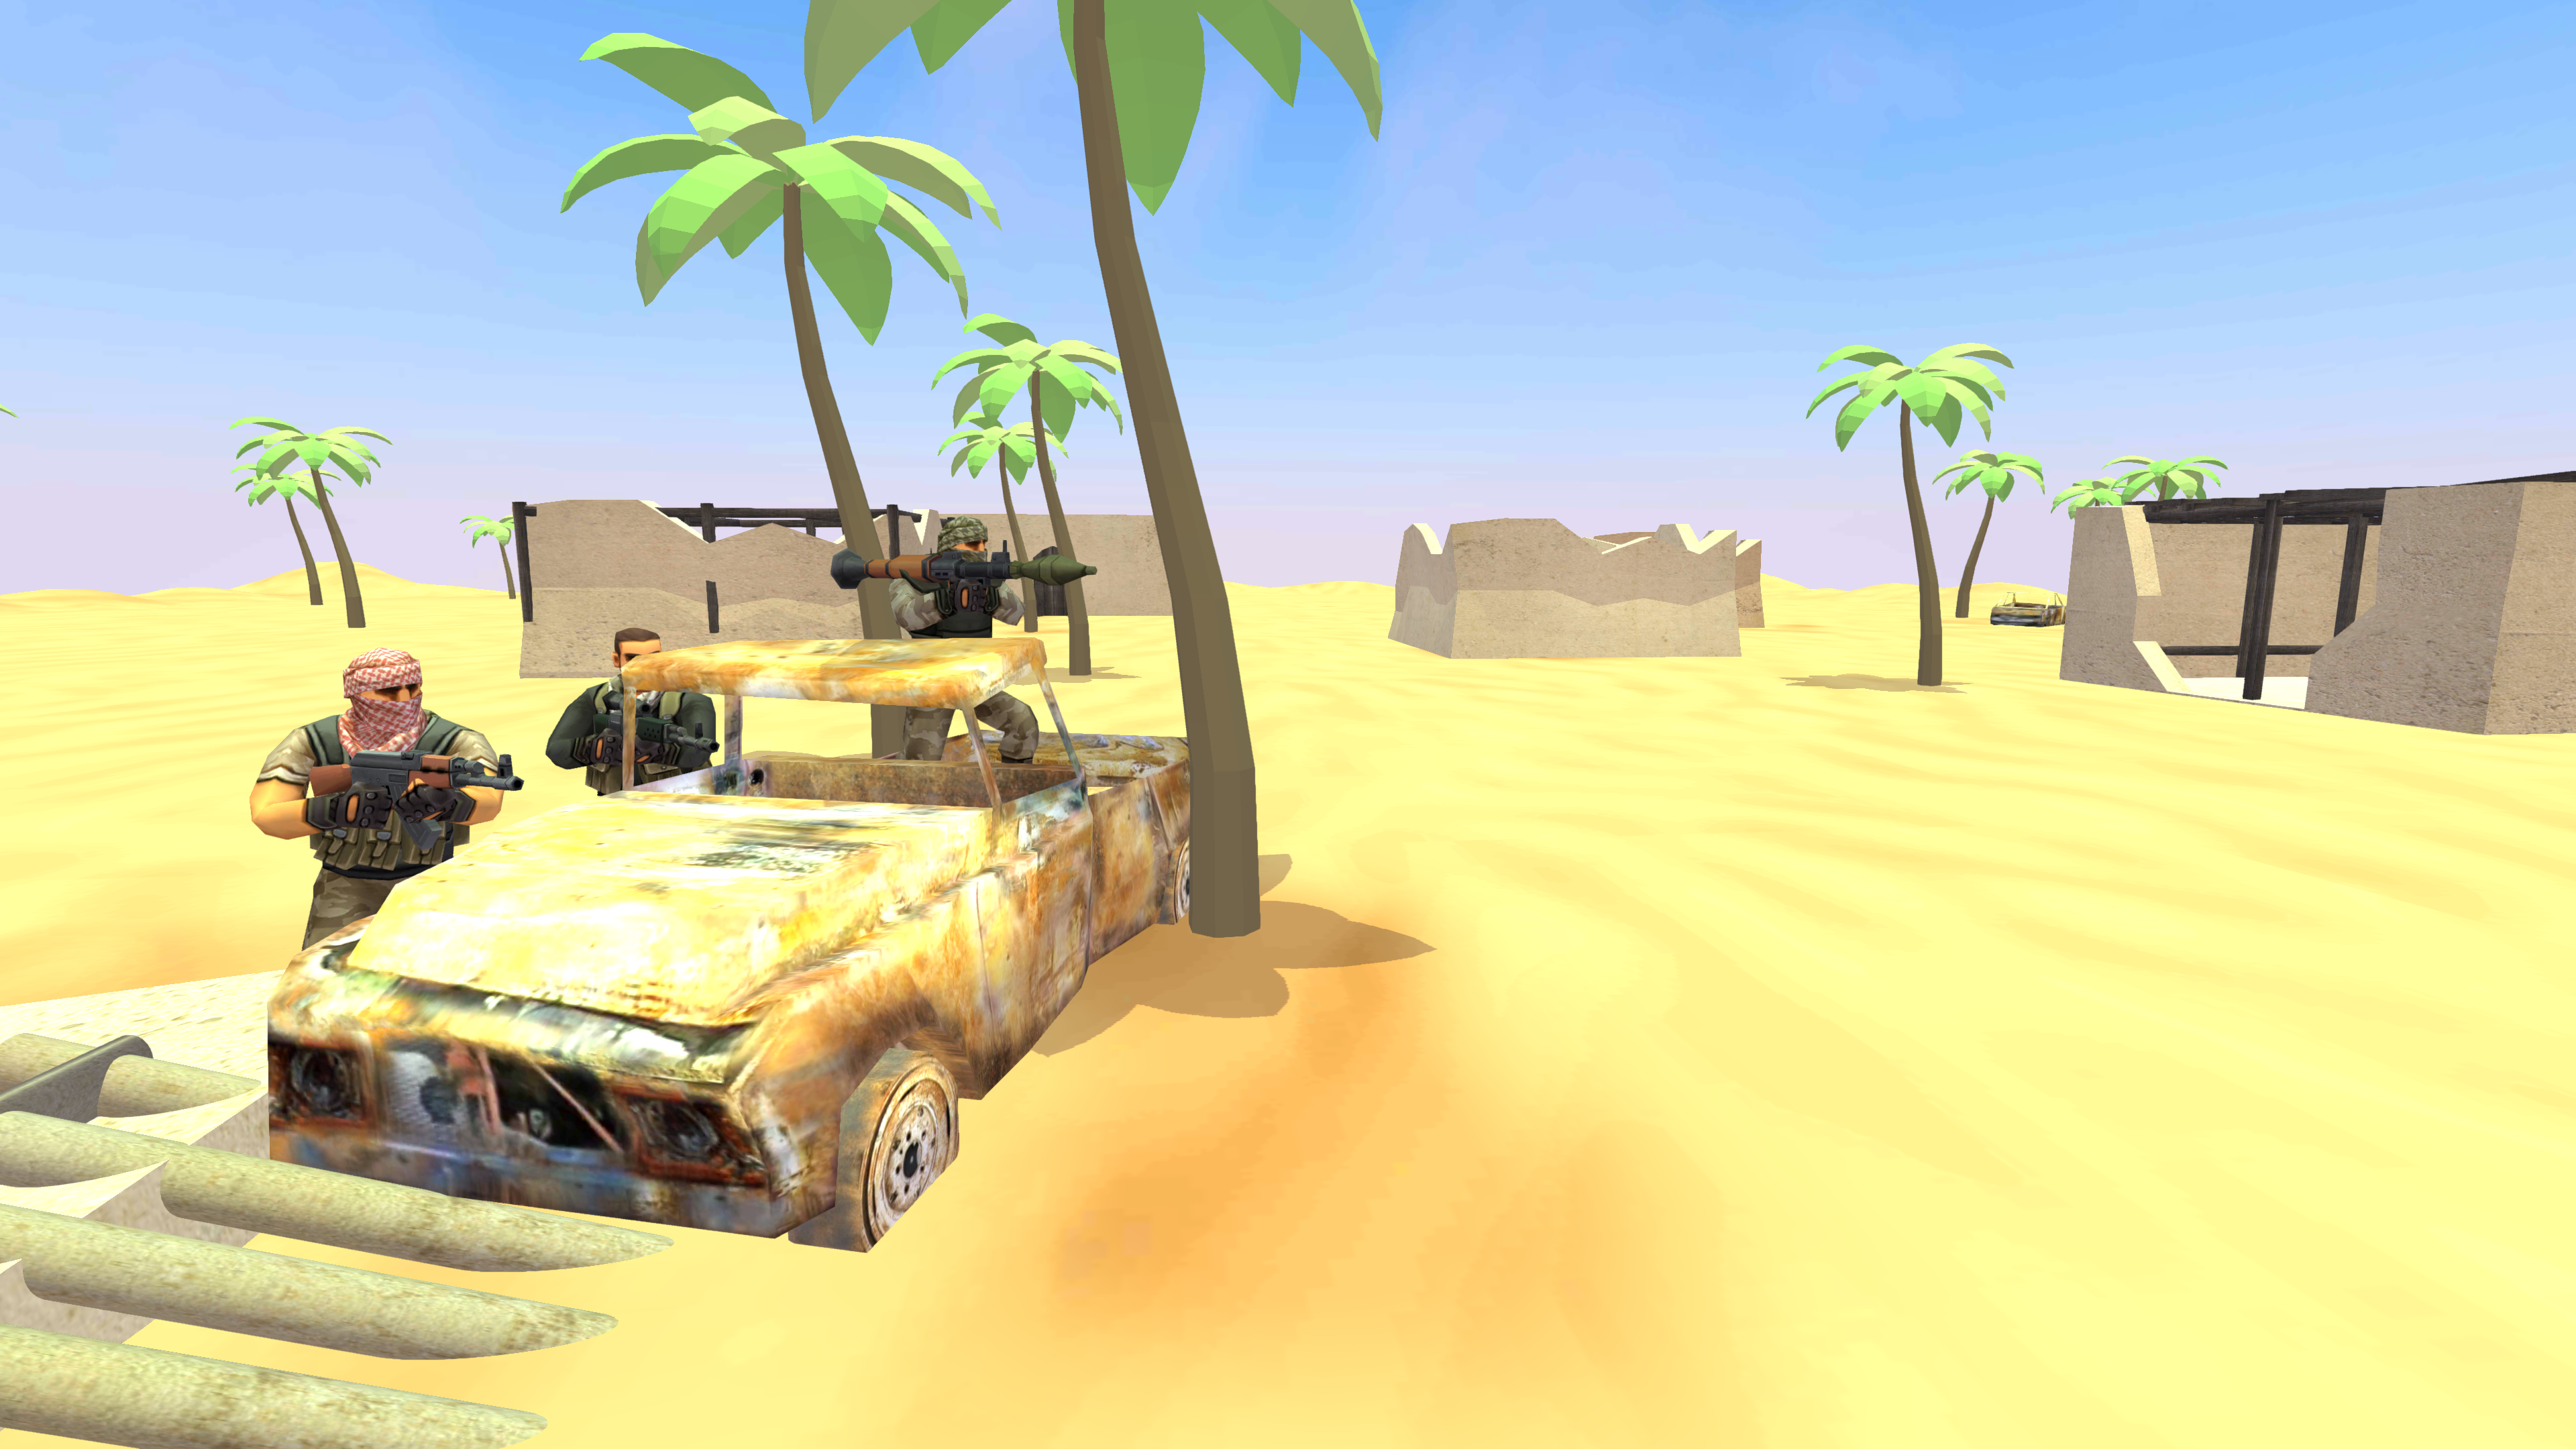 Screenshot 1 of Epic Battle Simulator zur Terrorismusbekämpfung 1.08